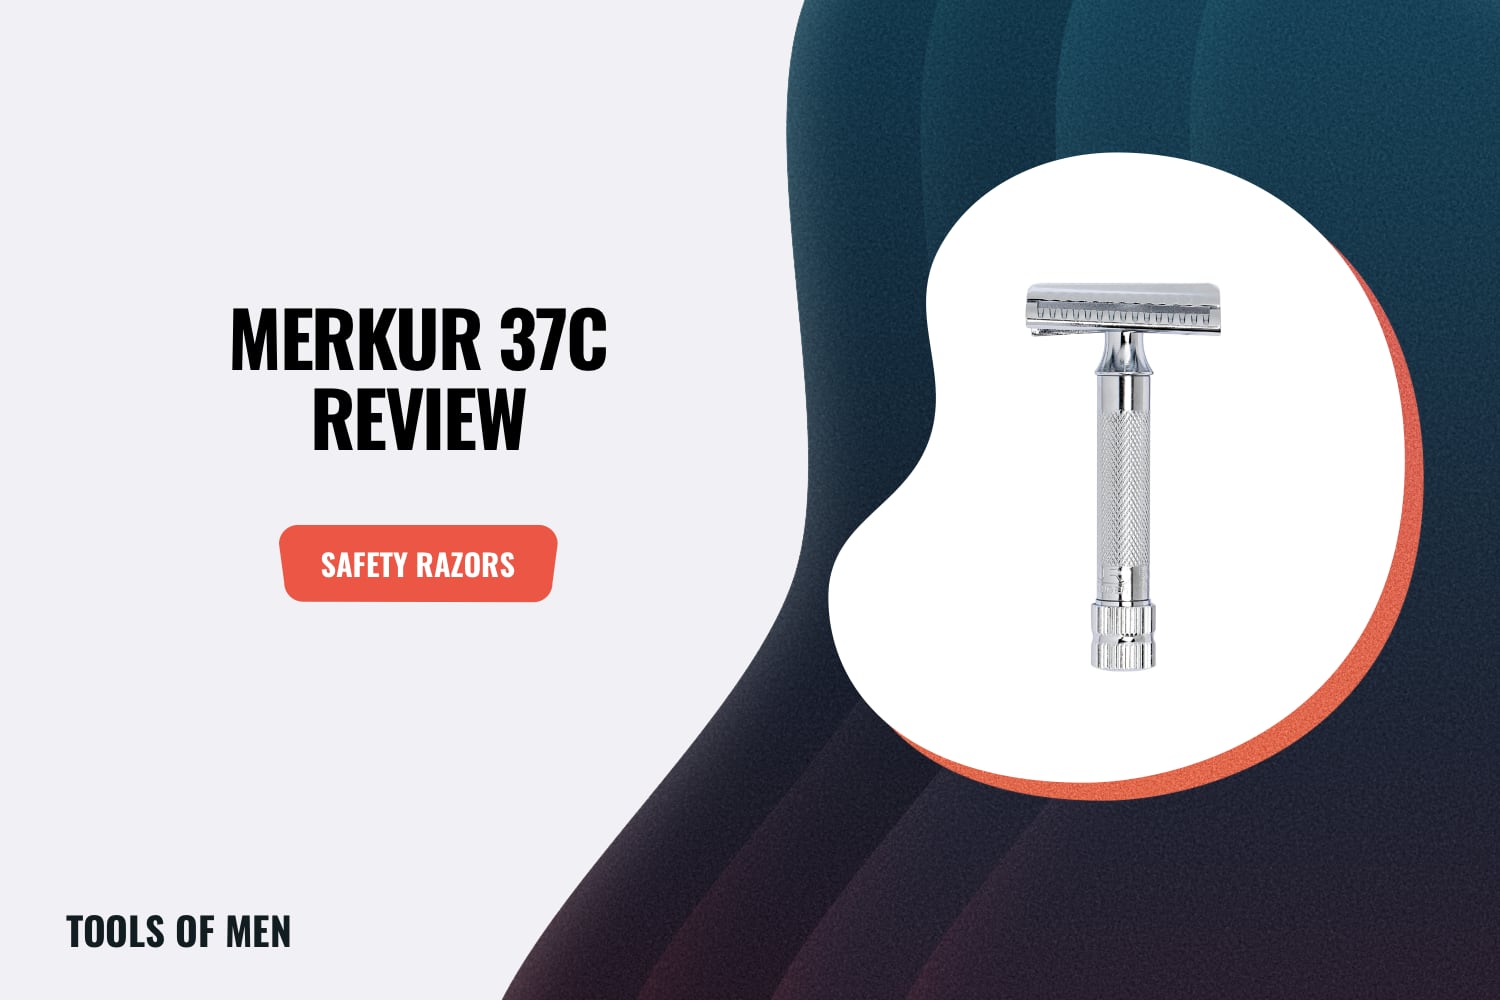 Merkur 37C Review feature image